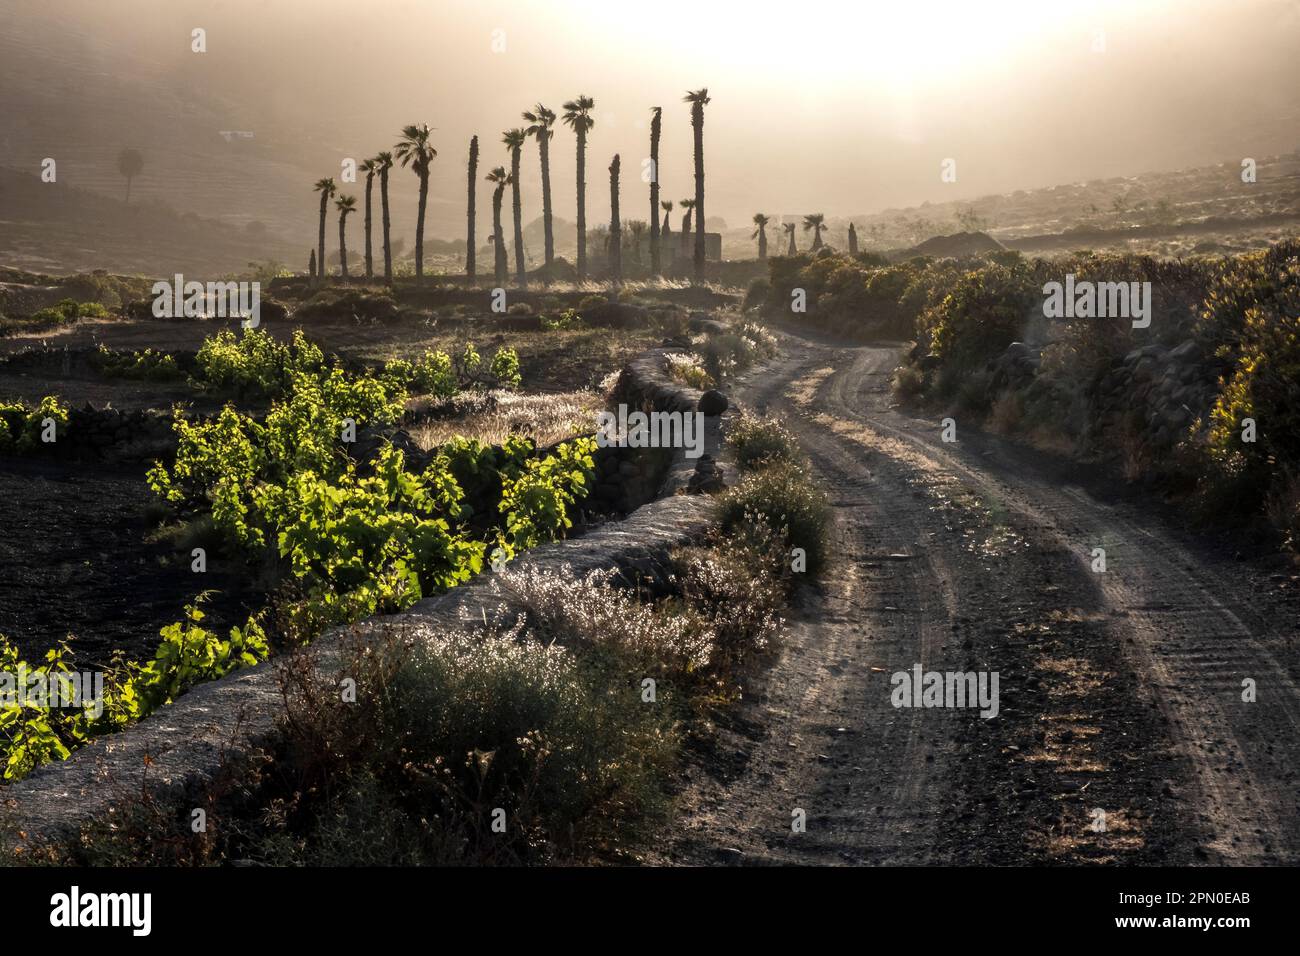 A dirt road through a farm in the Barranco de Chafariz, Lanzarote, Canary Islands, Spain Stock Photo